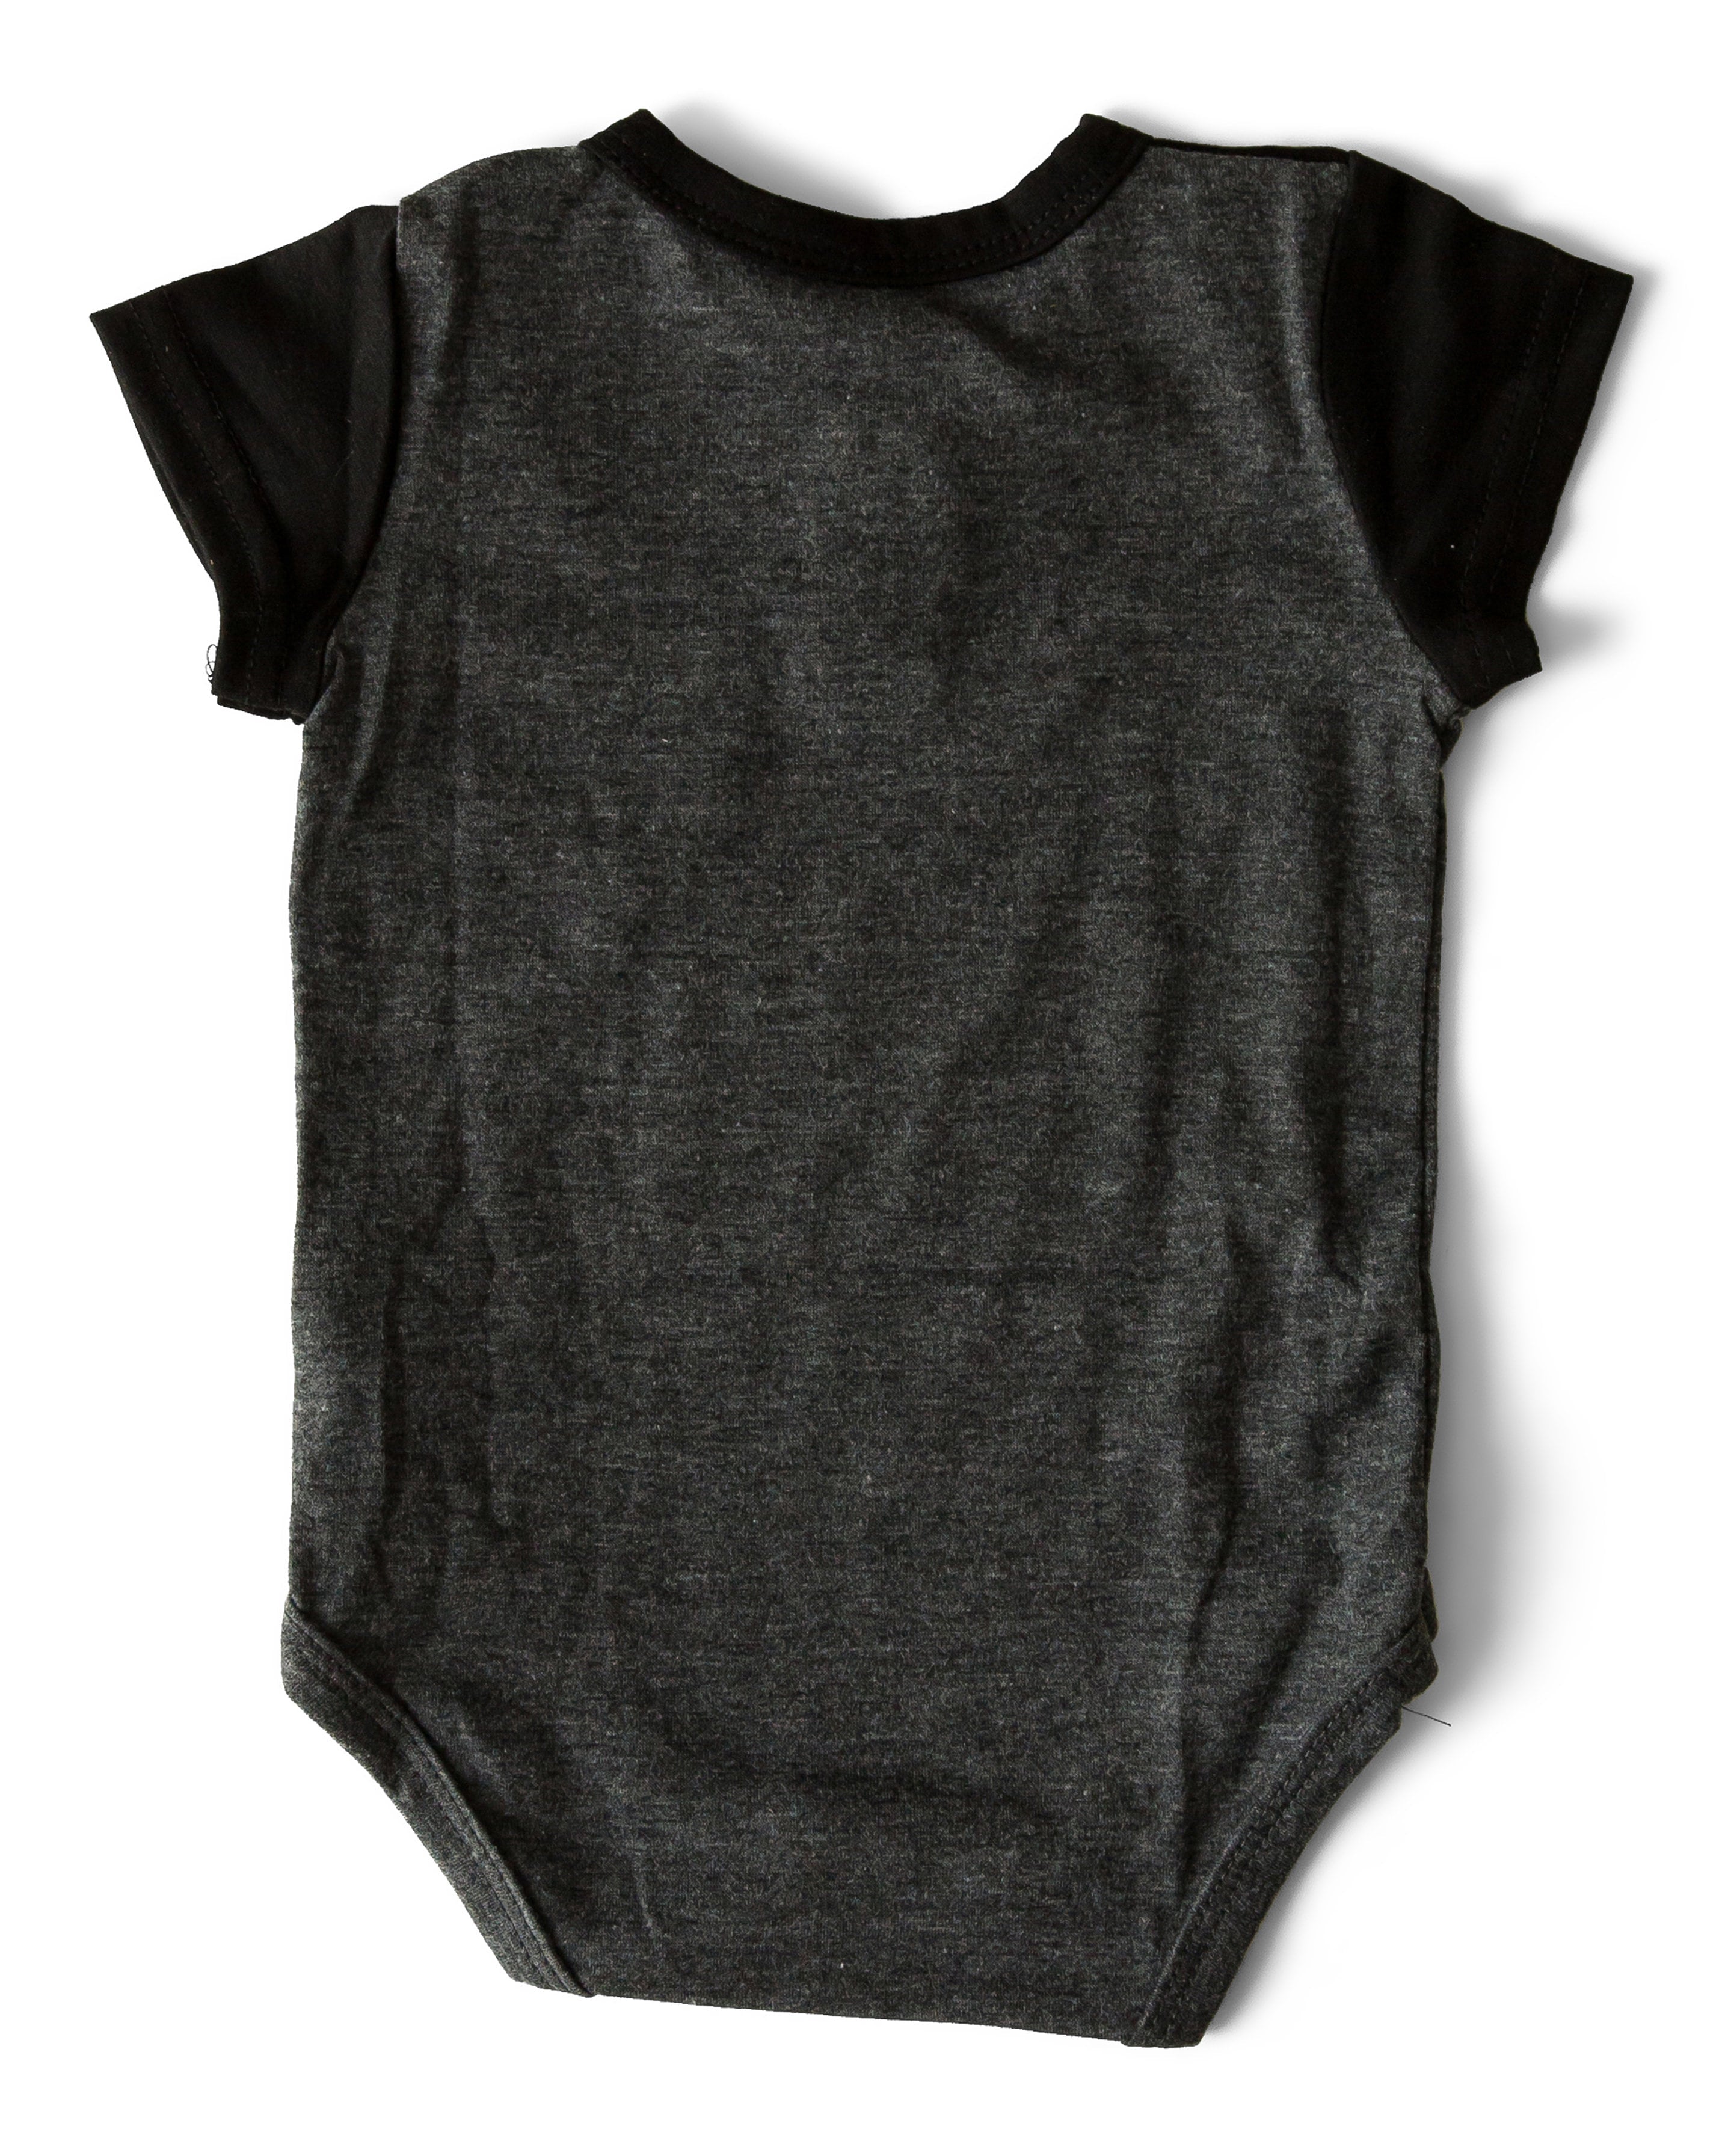 Littlest Prince Black & Charcoal Henley Shirt – BOUJIE KIDZ